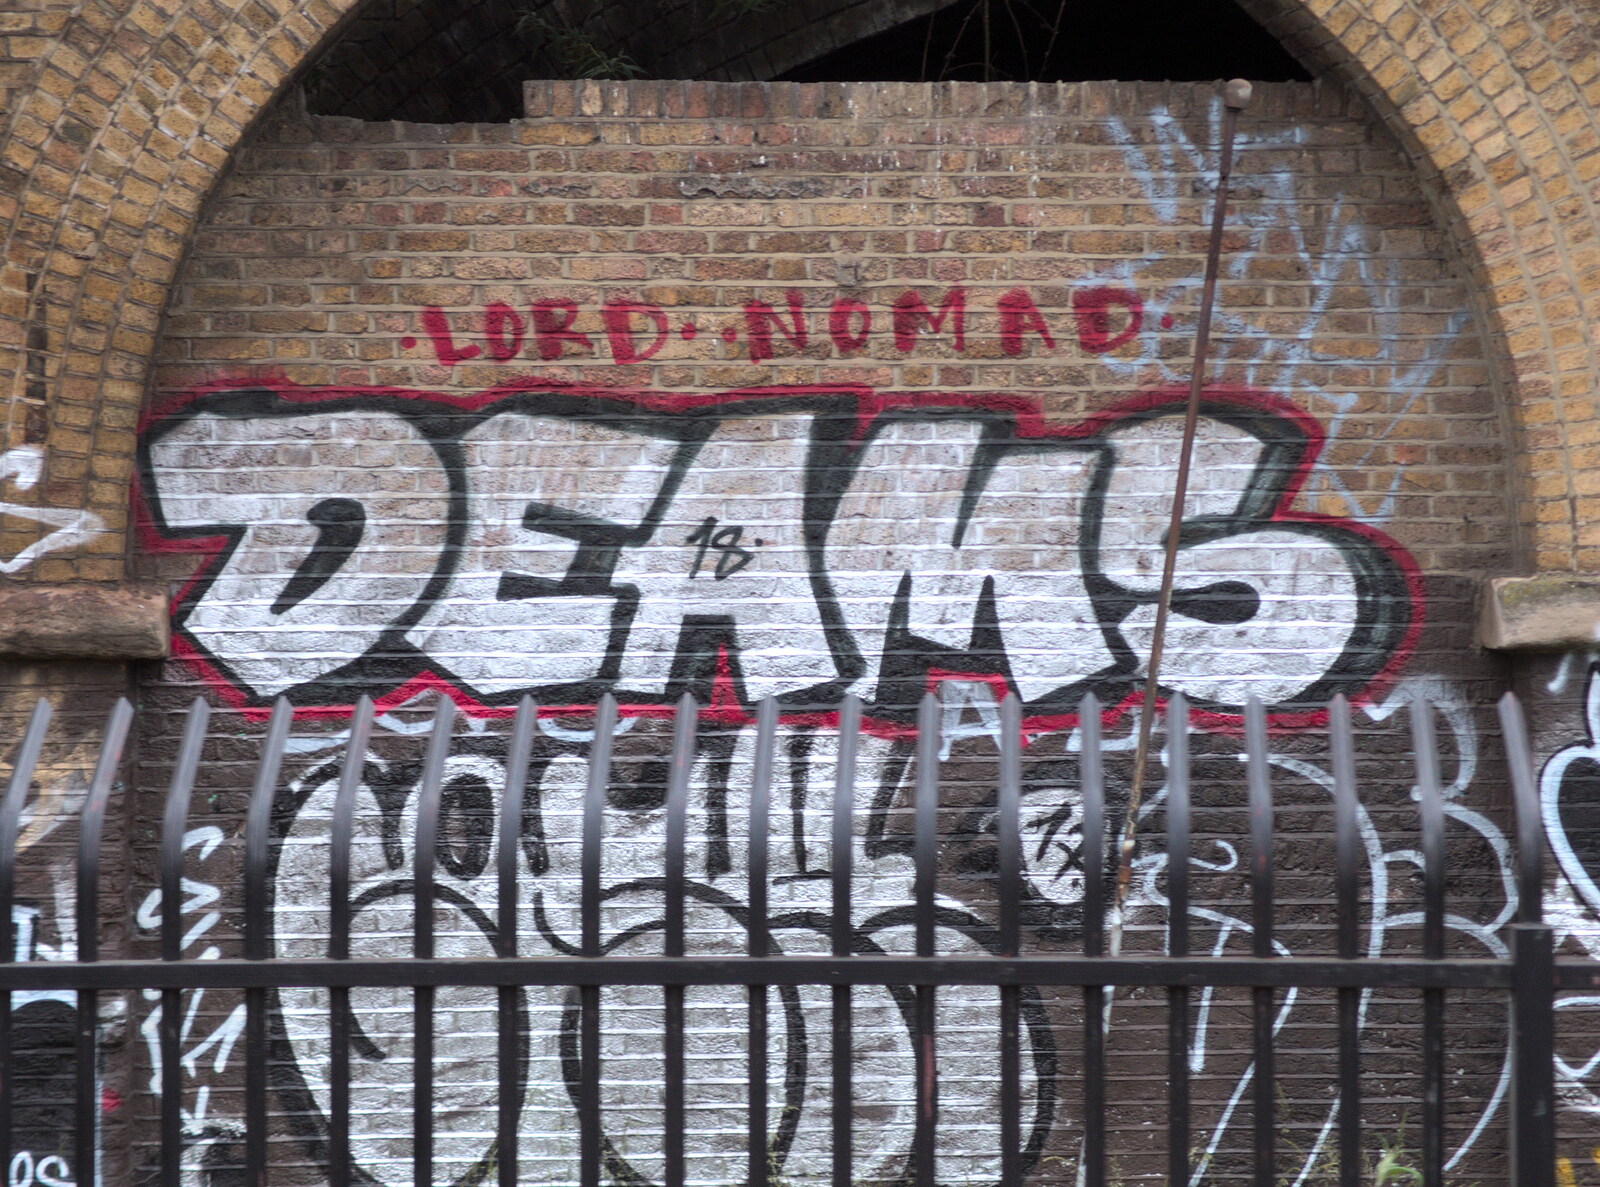 Lord Nomad and more Deams graffiti from SwiftKey's Hundred Million, Paddington, London - 13th June 2018